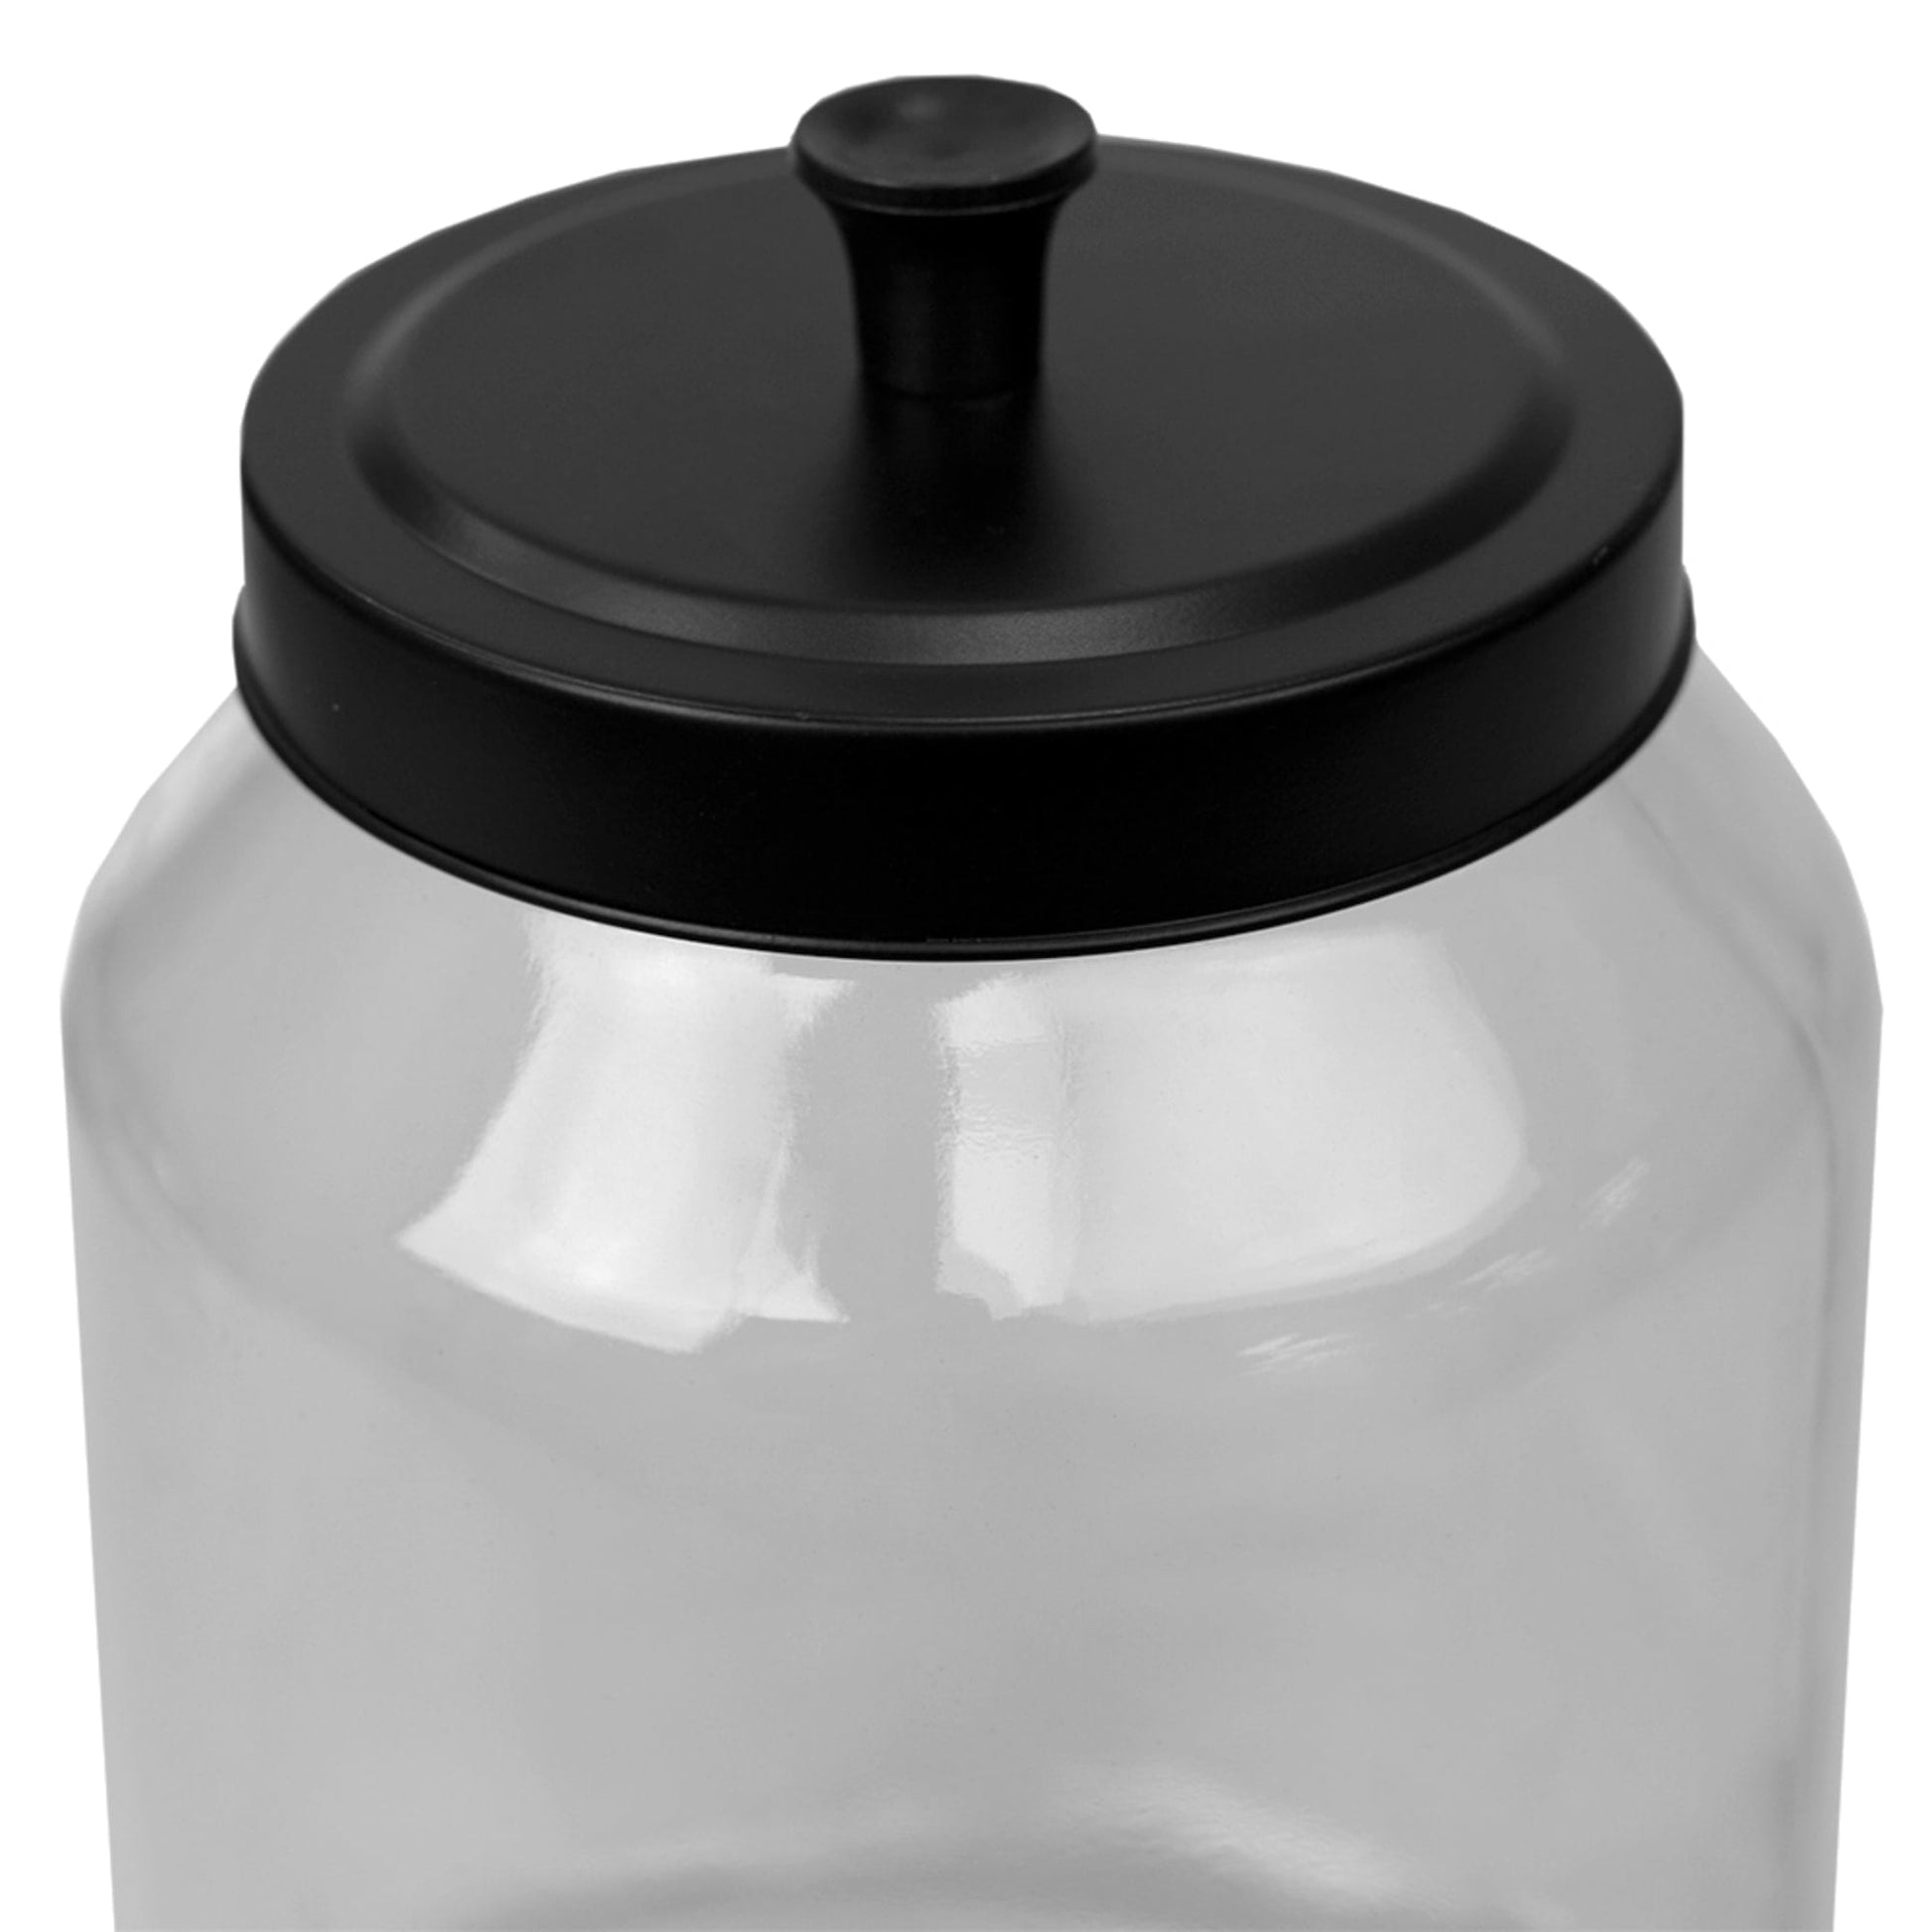 Acopa Dusk 3 Gallon Glass Jar with Black Metal Lid